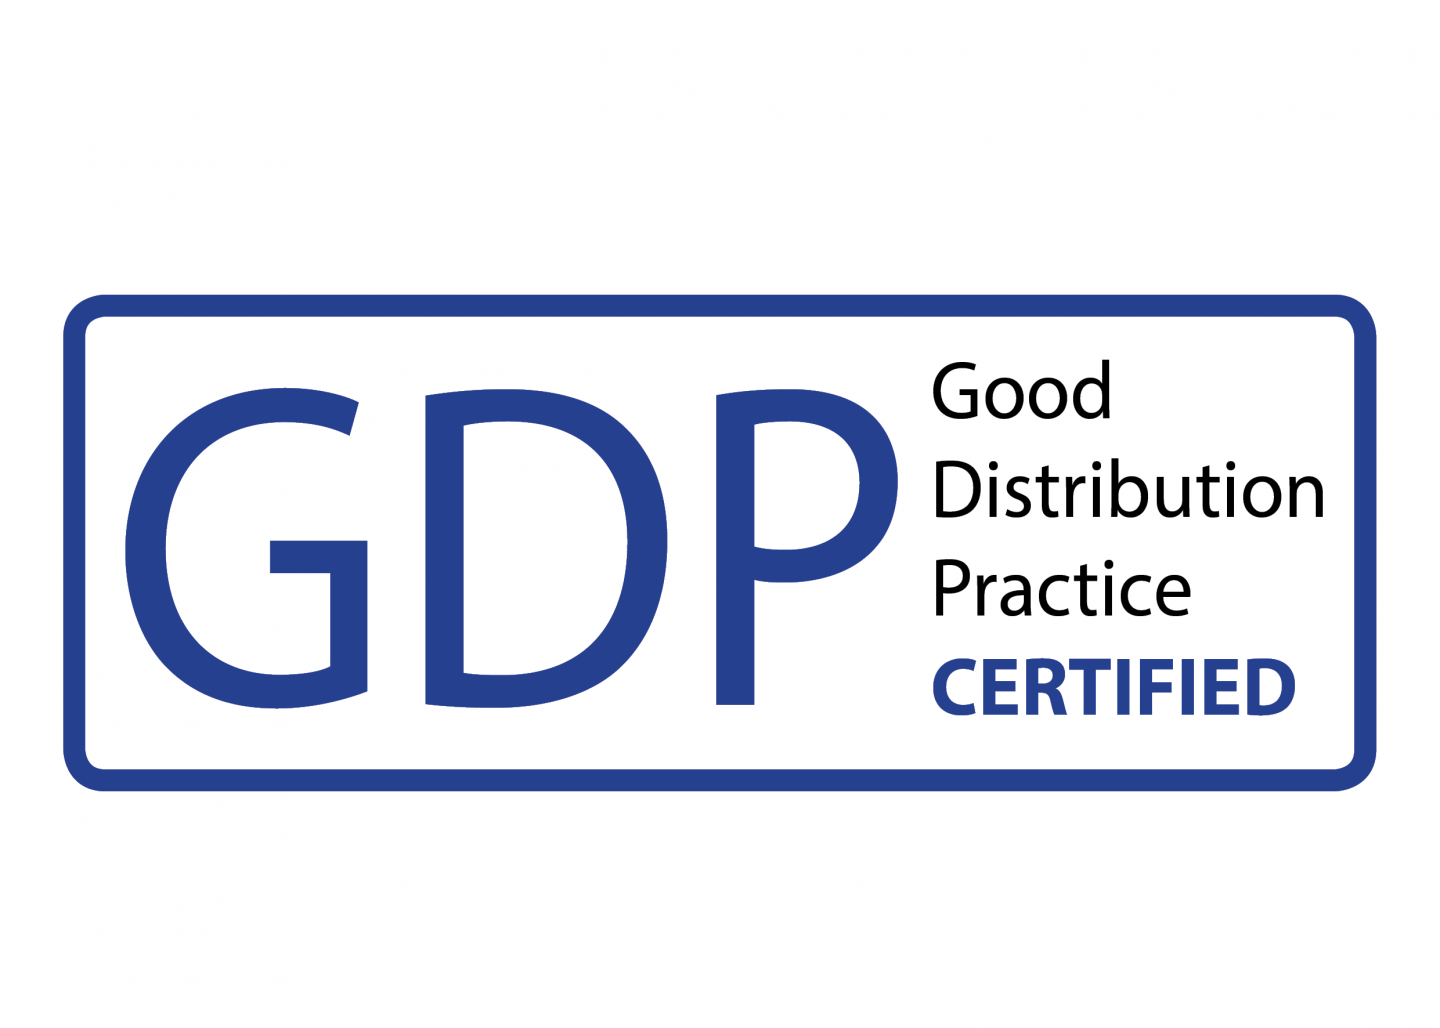 Надлежащая служба. GDP стандарт. Надлежащая дистрибьюторская практика GDP. GDP good distribution Practice надлежащая дистрибьюторская практика. Сертификат GDP.